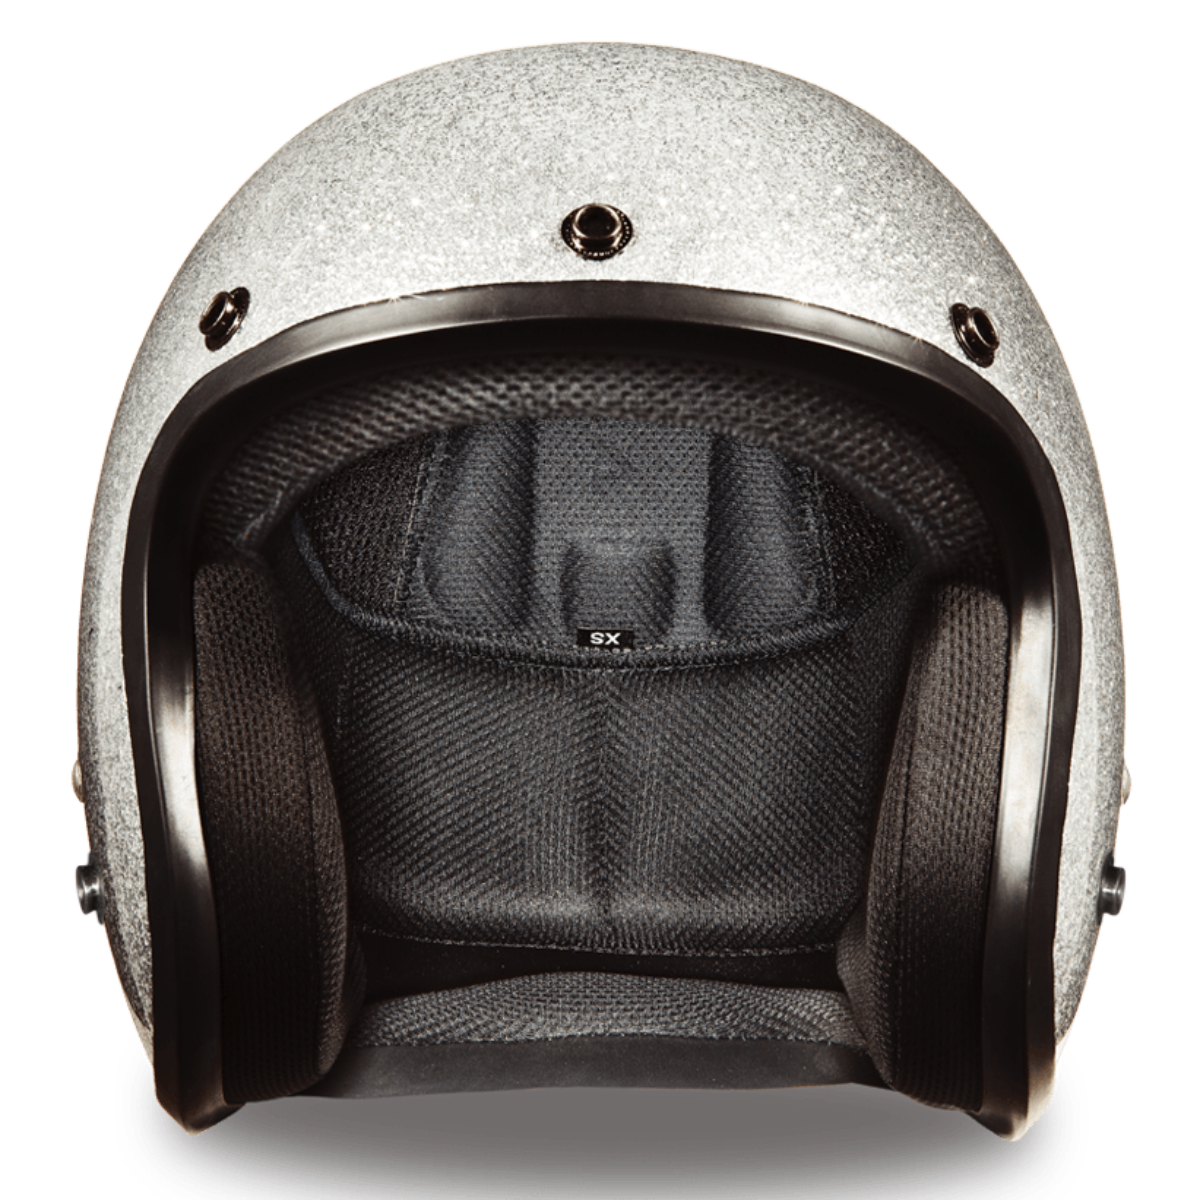 Daytona D.O.T. Cruiser Silver Metal Flake Motorcycle Open Face Helmet - American Legend Rider